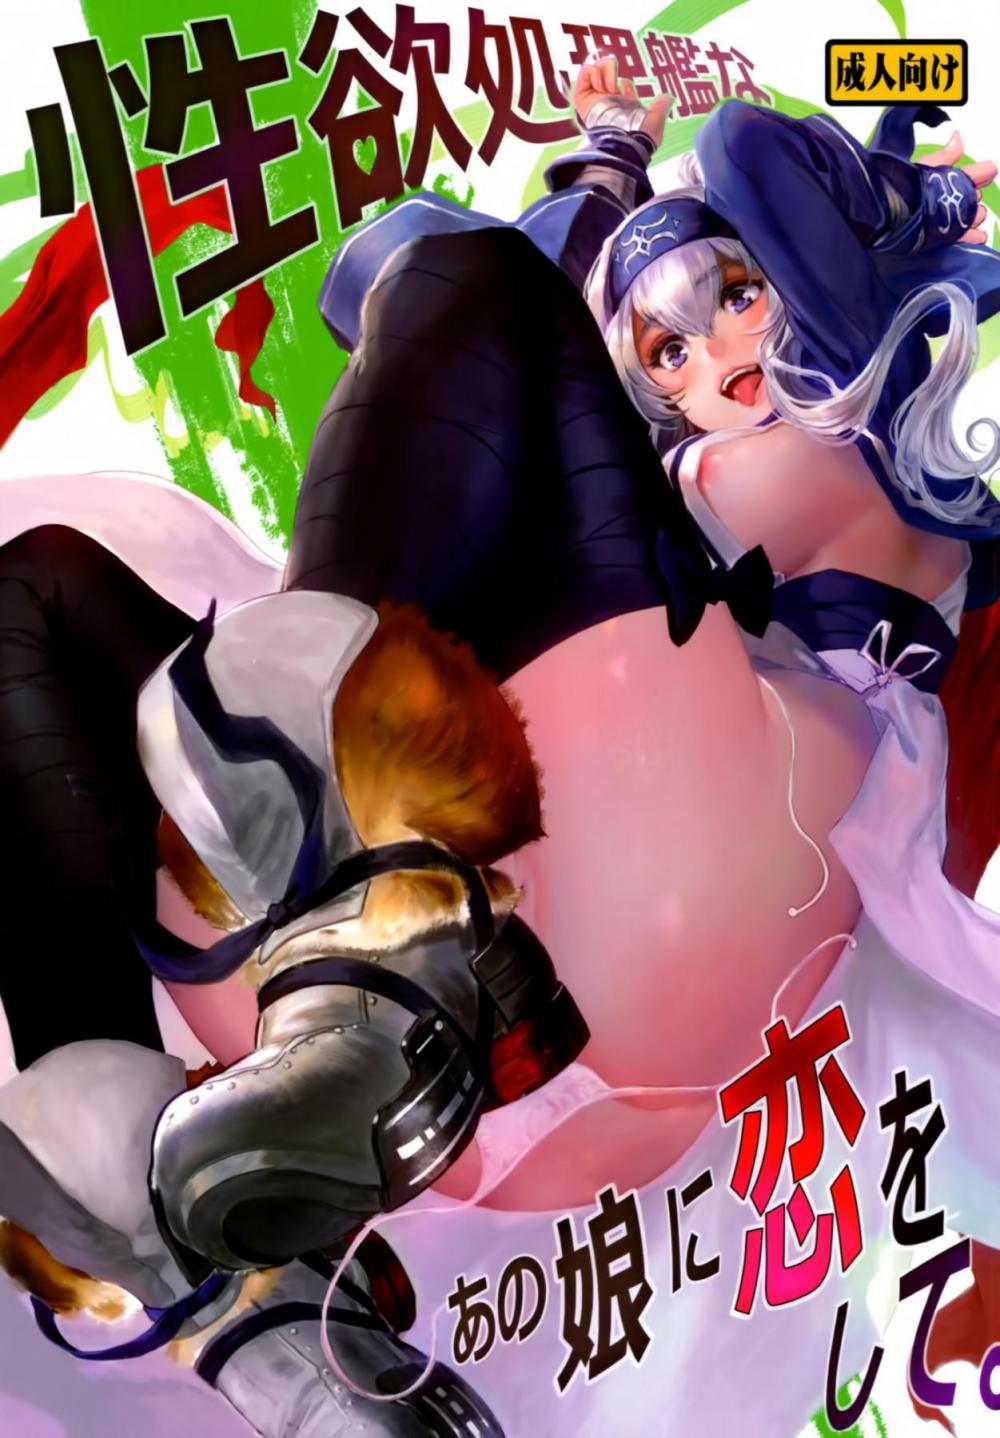 Hentai Manga Comic-Making Love To A Sexual Servicing Ship Girl-Read-1